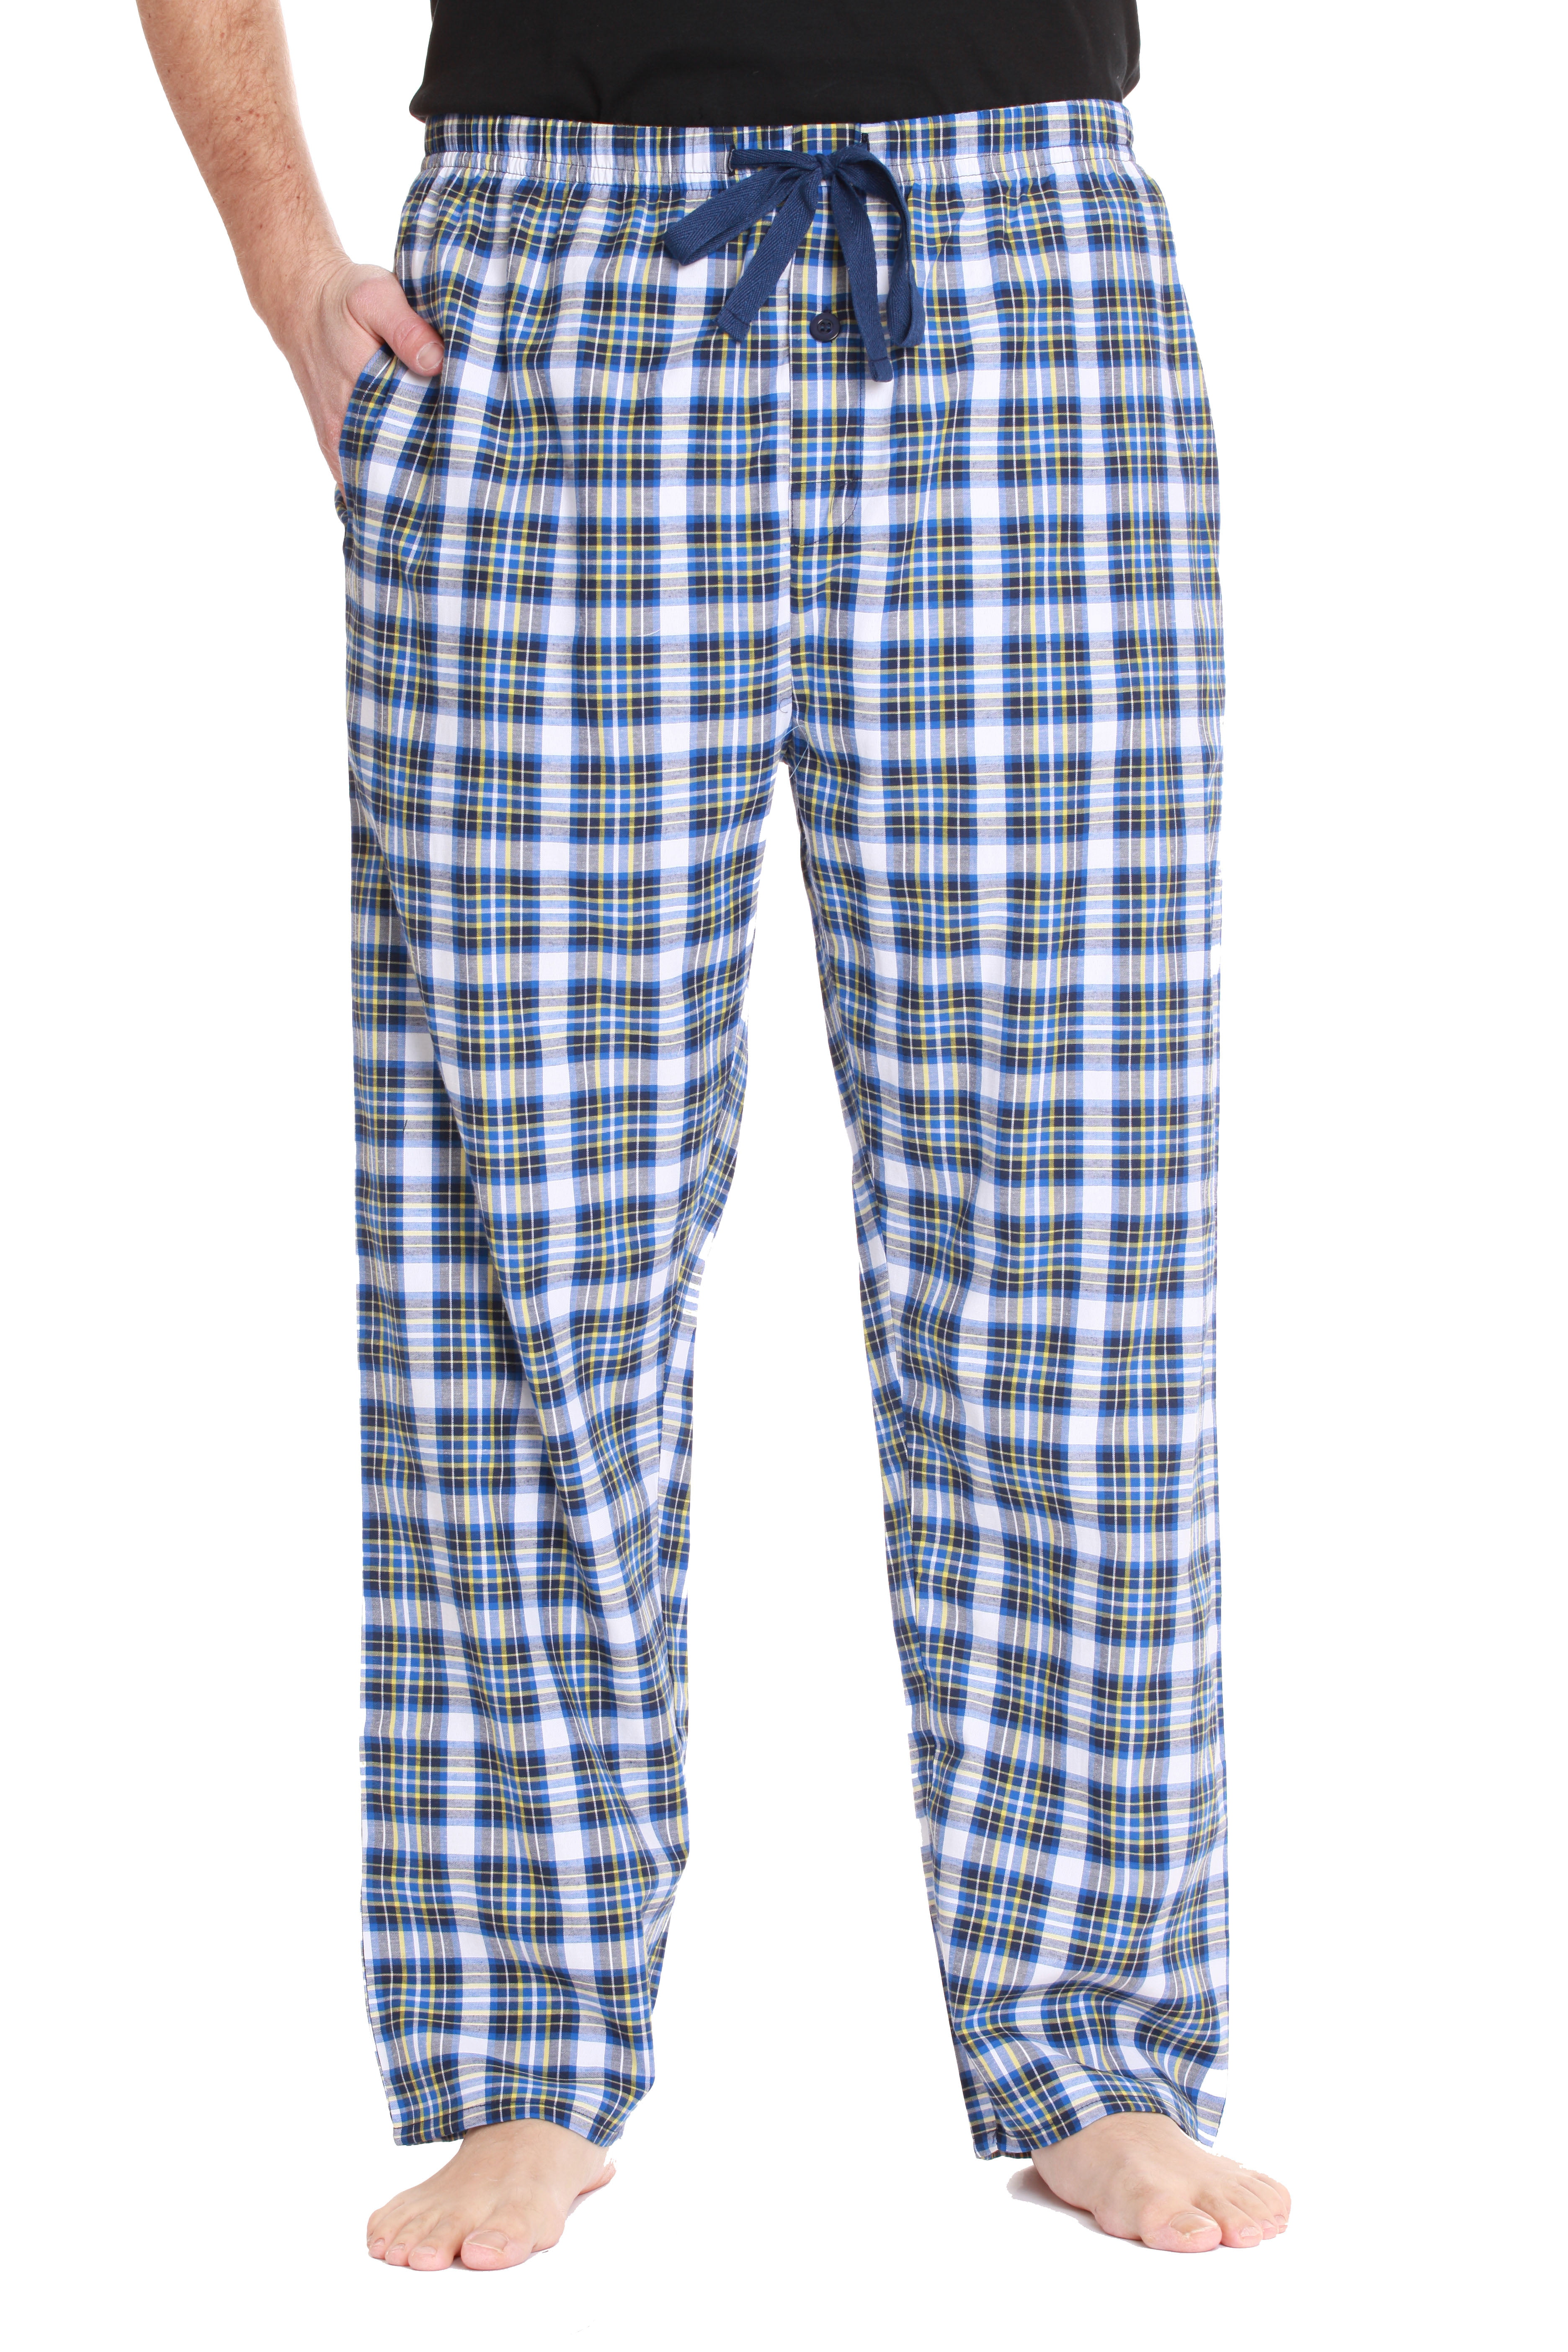 #followme Mens Plaid Poplin Pajama Pants with Pockets (Large, Blue ...